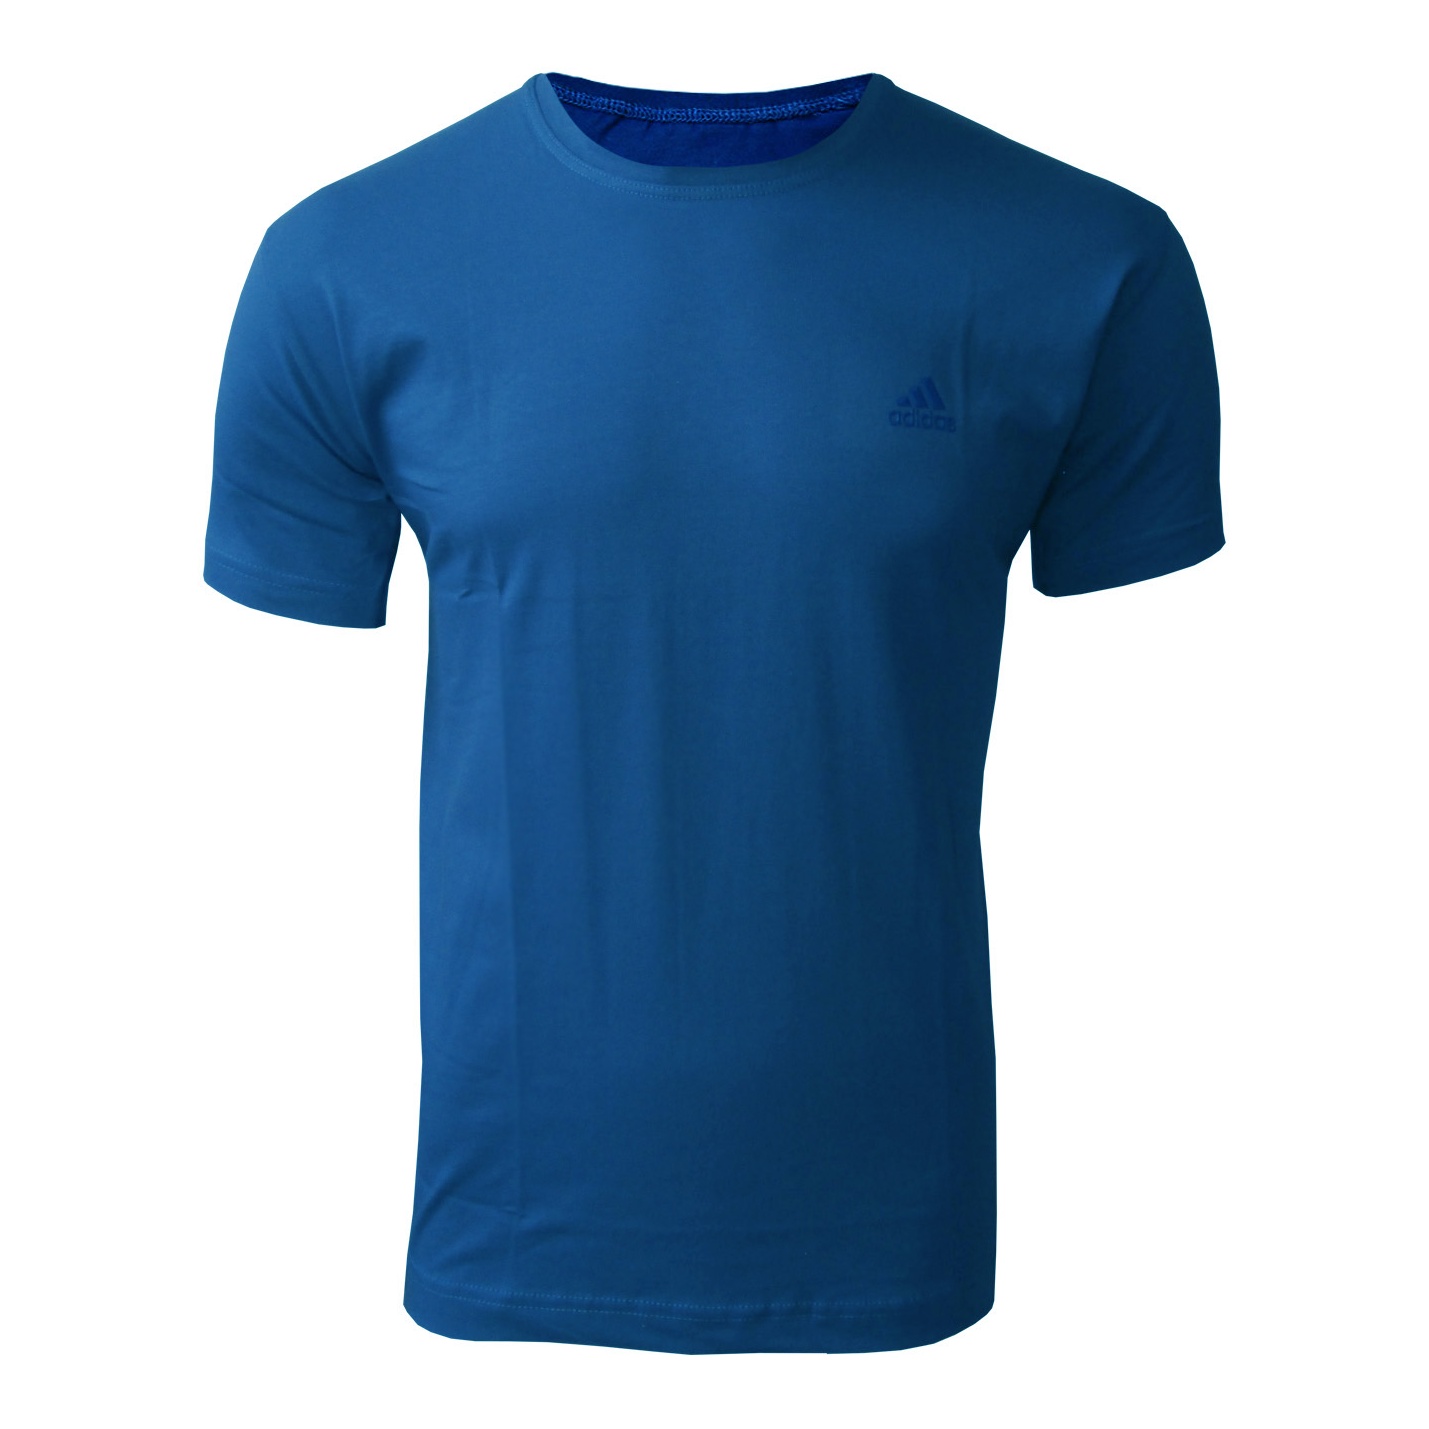 تیشرت آستین کوتاه مردانه روانبخش مدل D2M کد 20266 رنگ آبی لاجوردی